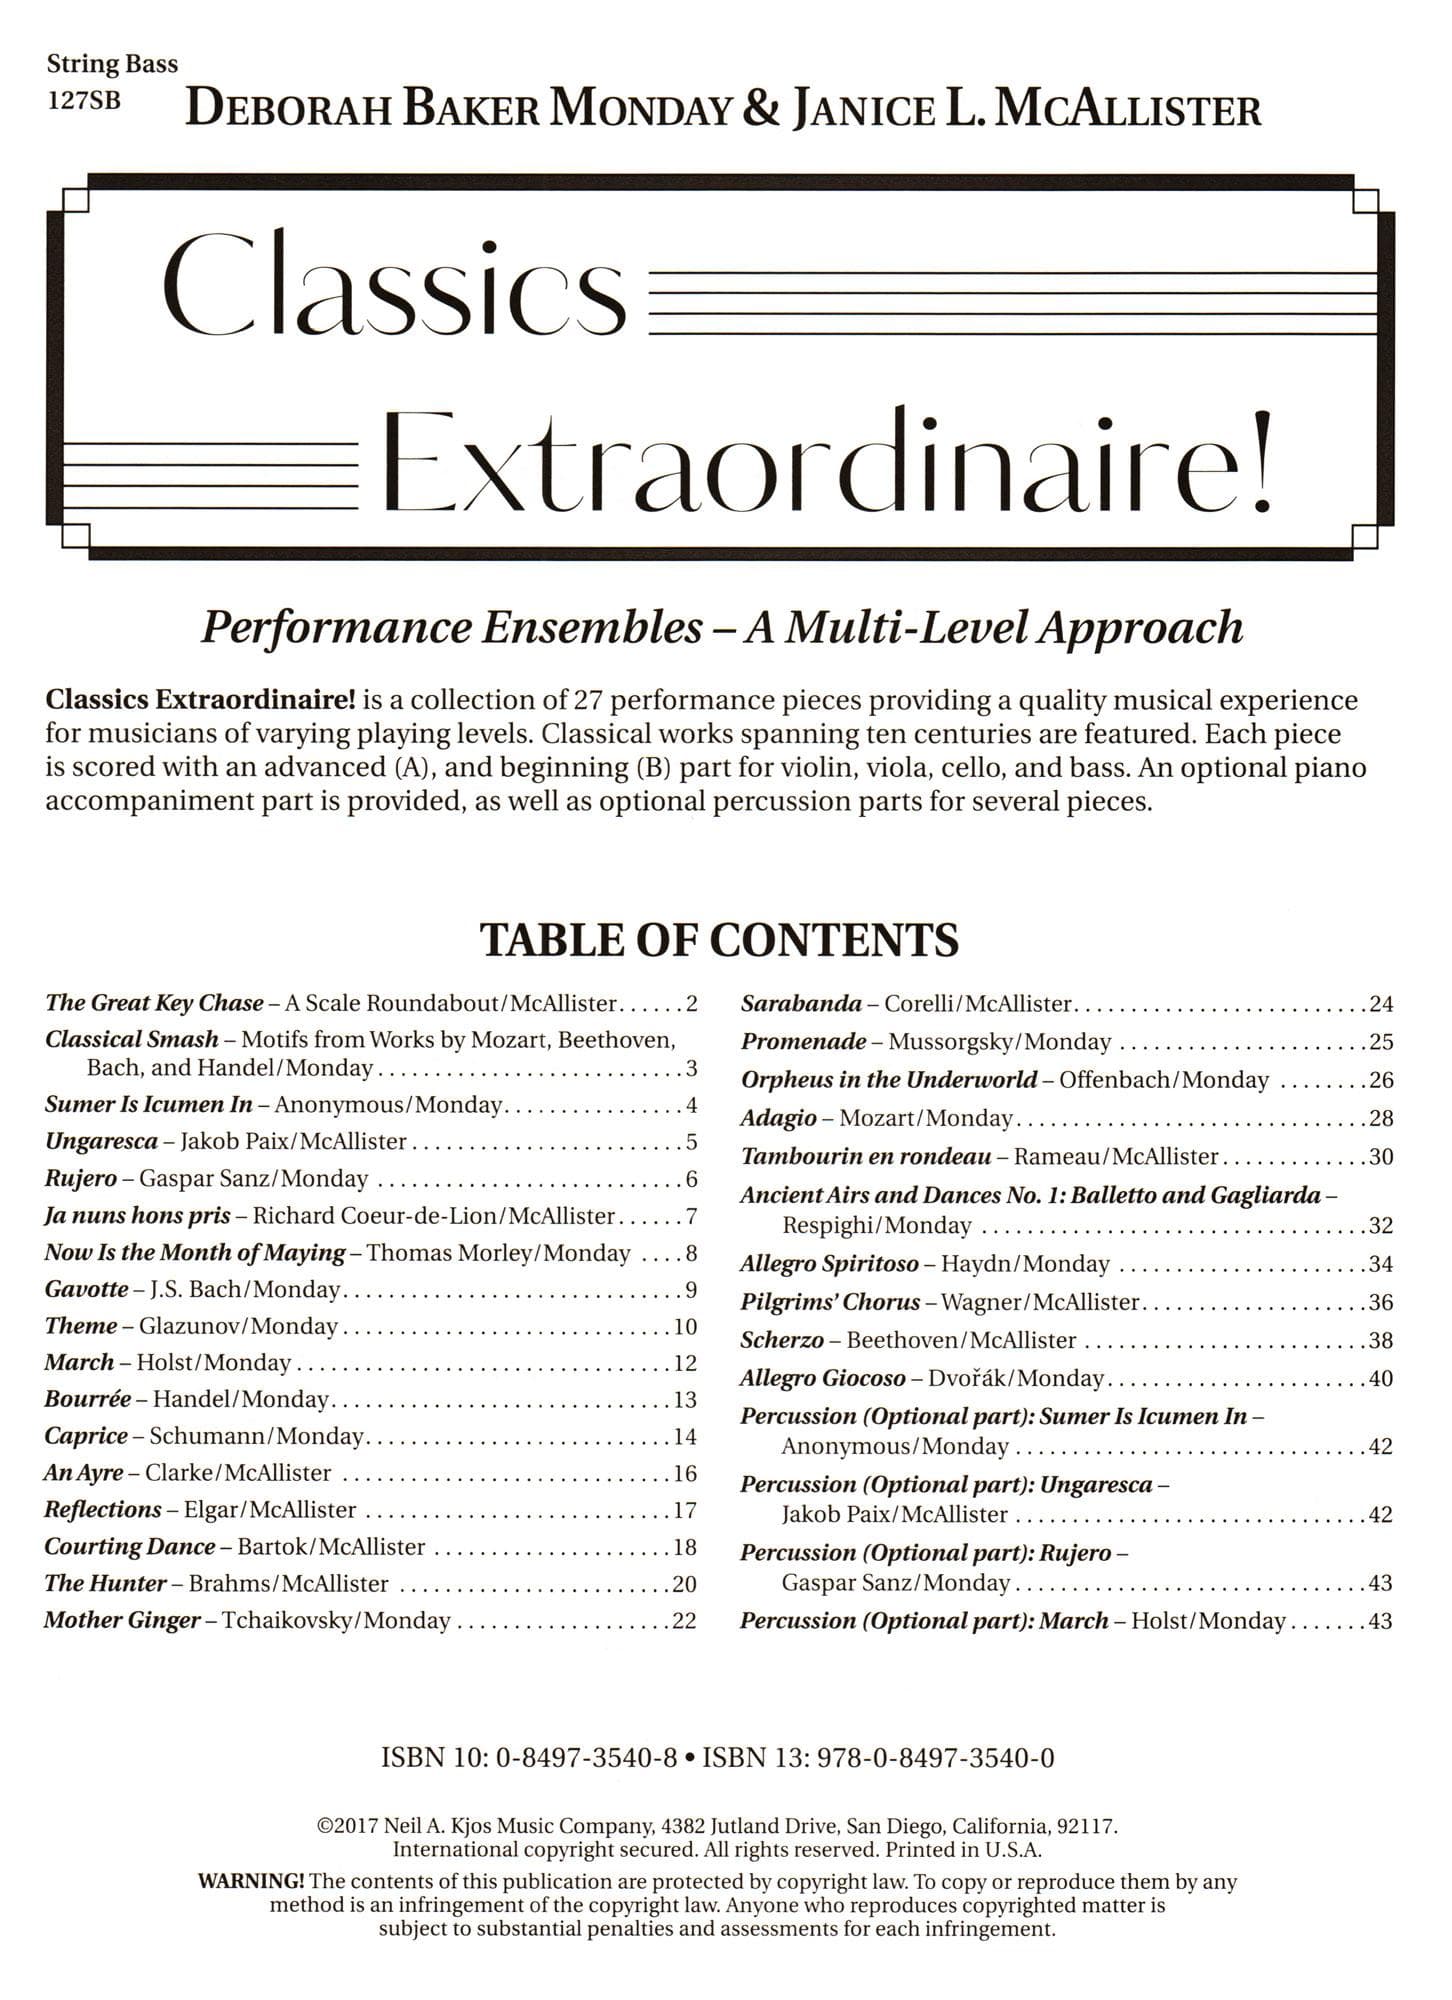 Classics Extraordinaire! - by Deborah Baker Monday & Janice L. McAllister - for Bass - Neil A Kjos Music Company